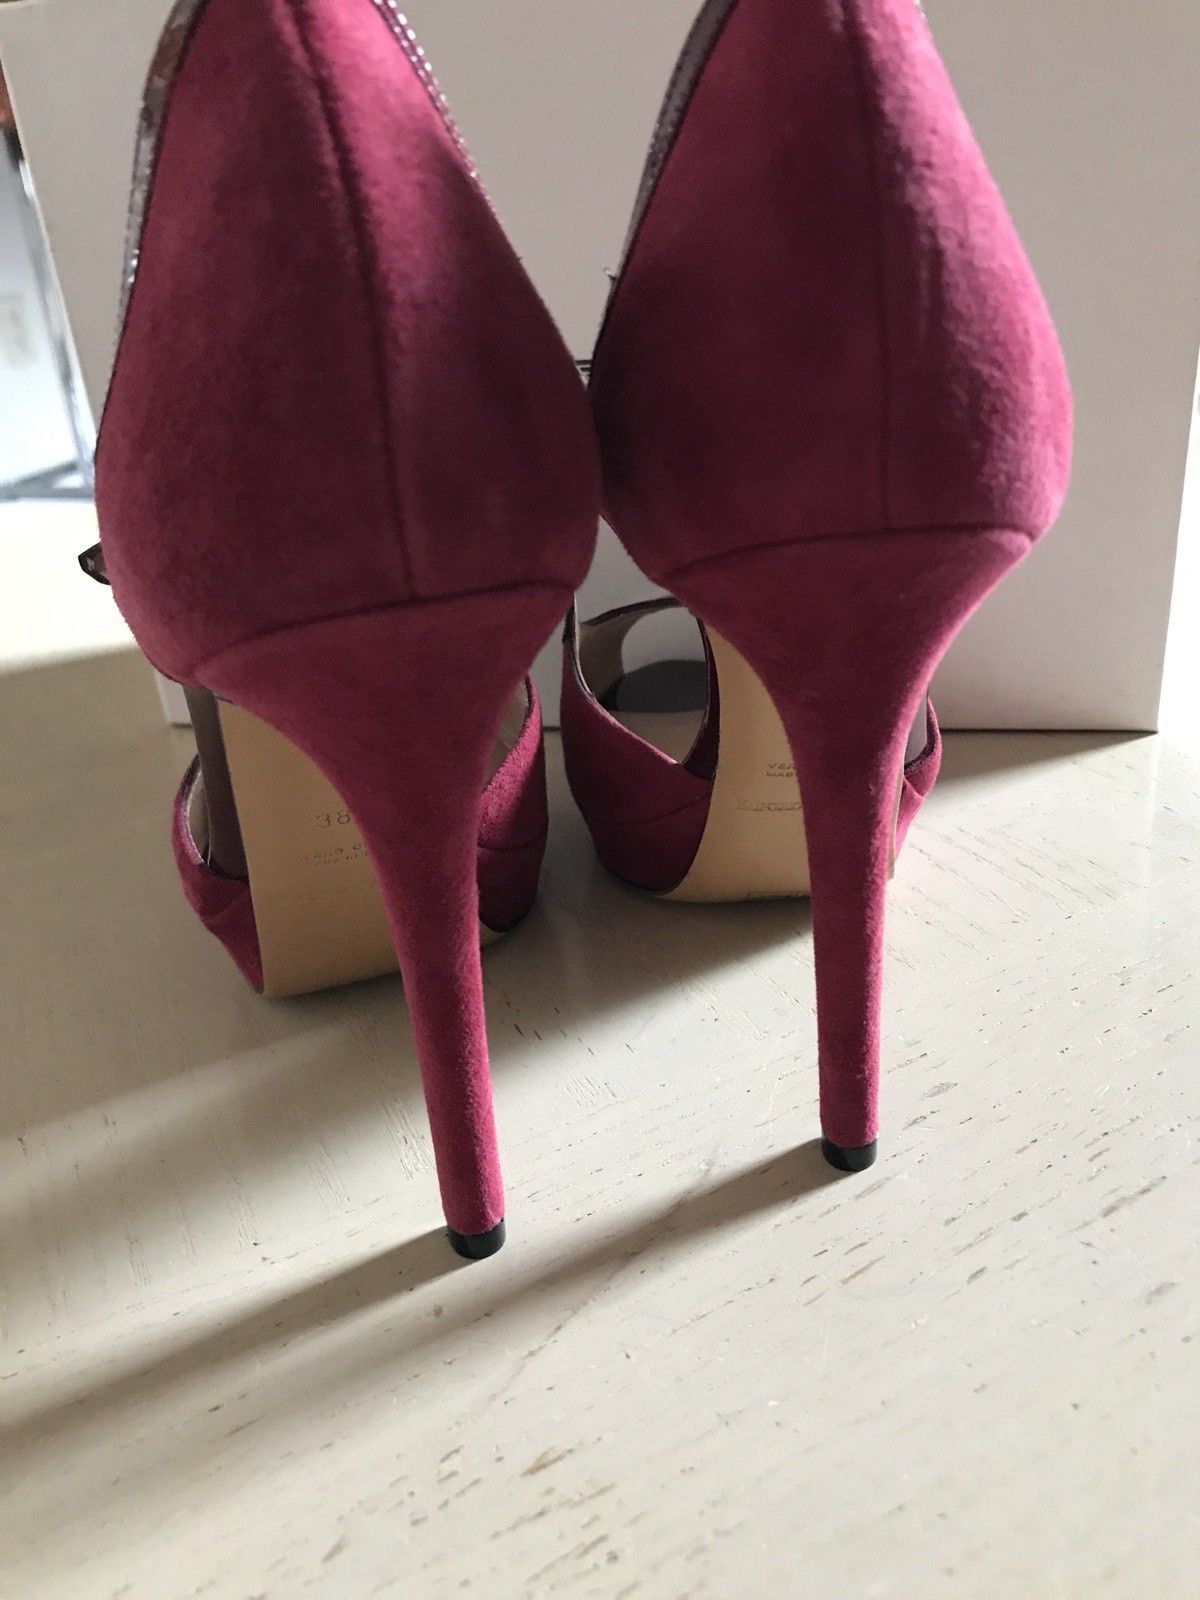 NIB $695 Emporio Armani Women’s Sandal Shoes Red/Burgundy 9 US ( 39 Eu ) X3G130 - BAYSUPERSTORE